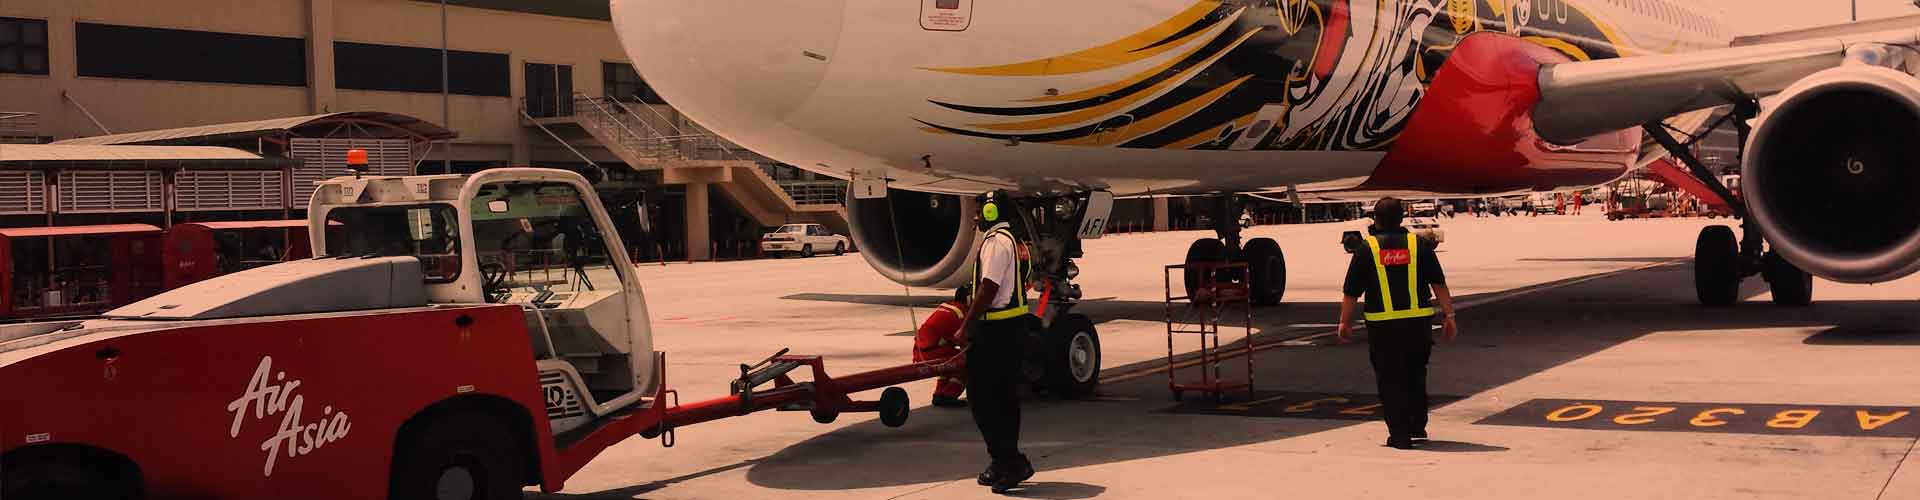 Dedienne Aerospace tow bar is pulling an A320 aircraft